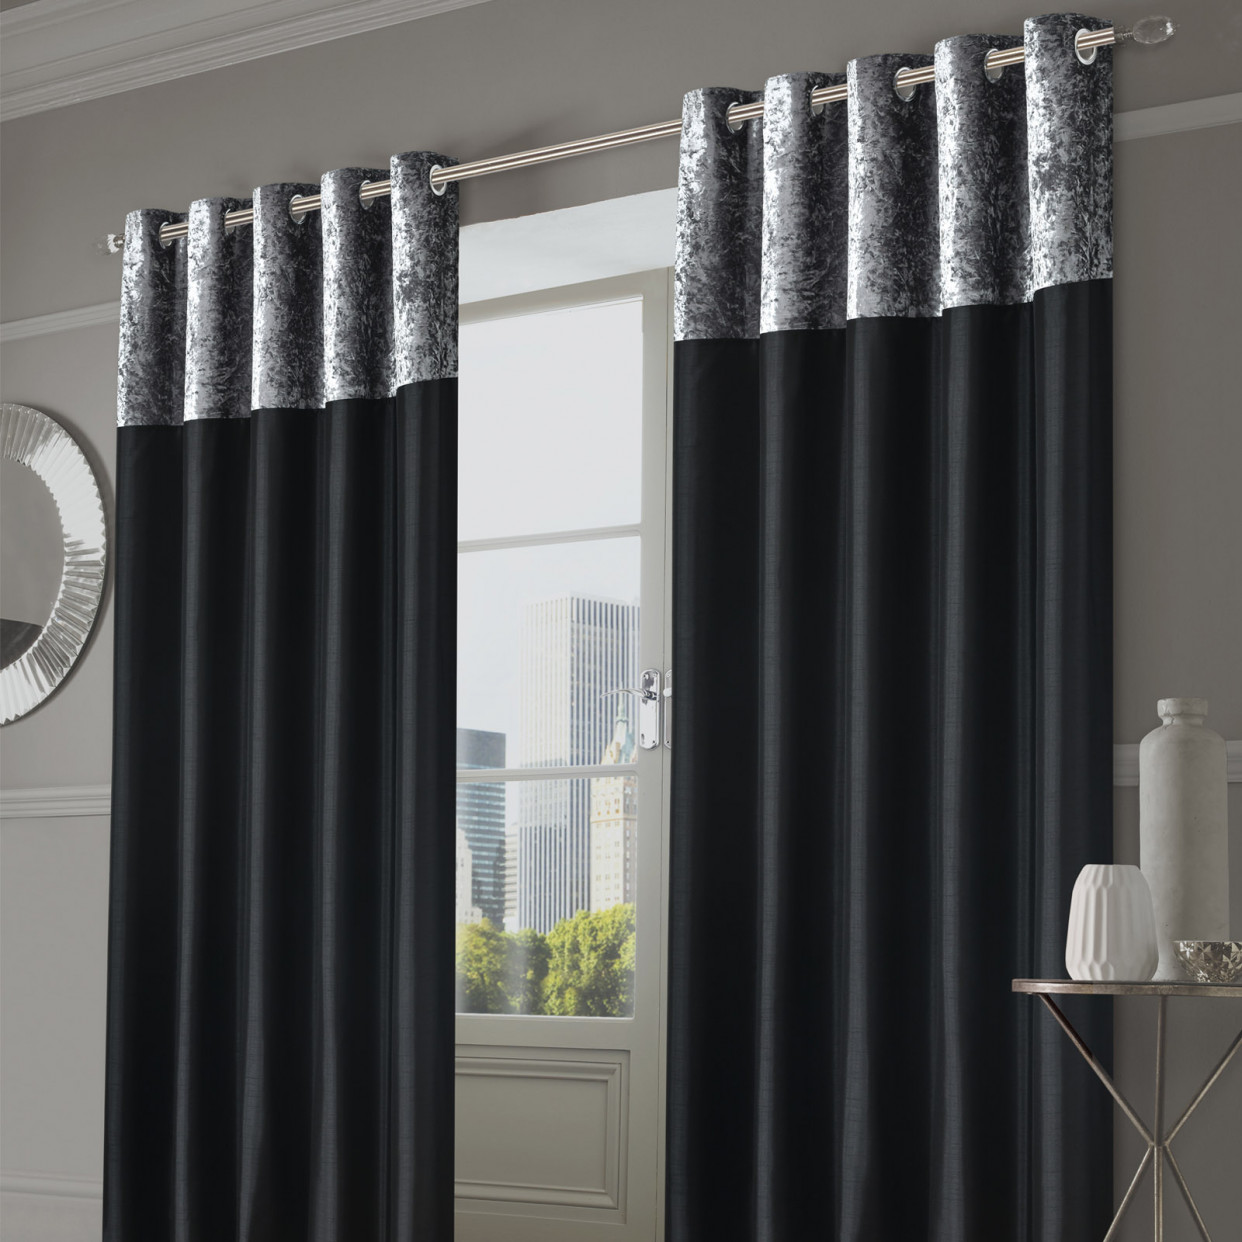 Sienna Home Manhattan Crushed Velvet Band Eyelet Curtains - Black, 90" x 90">